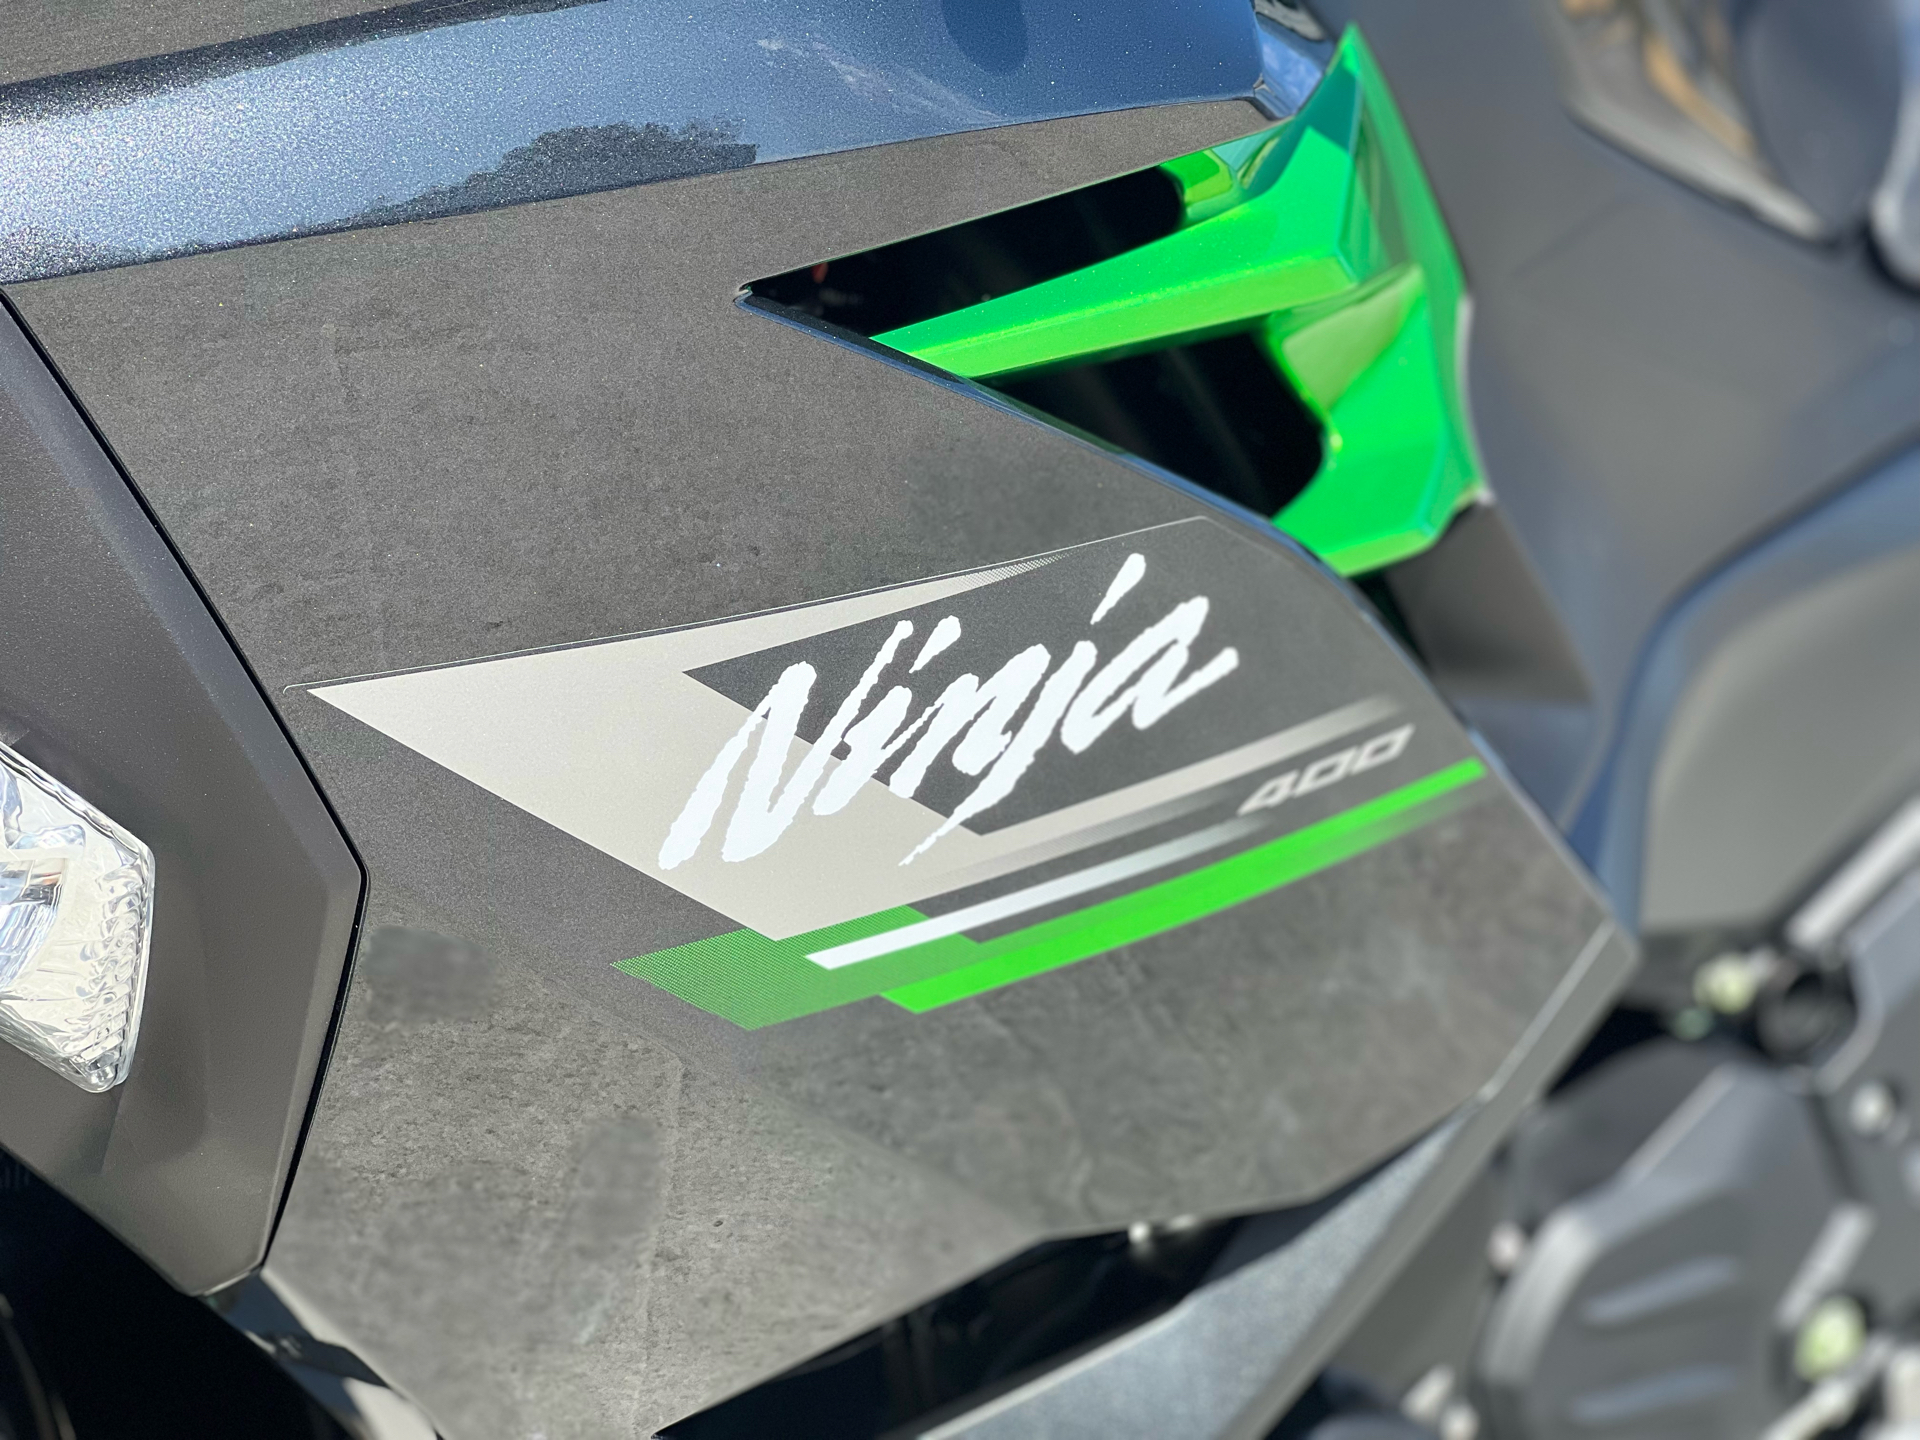 2023 Kawasaki Ninja 400 in Orlando, Florida - Photo 3